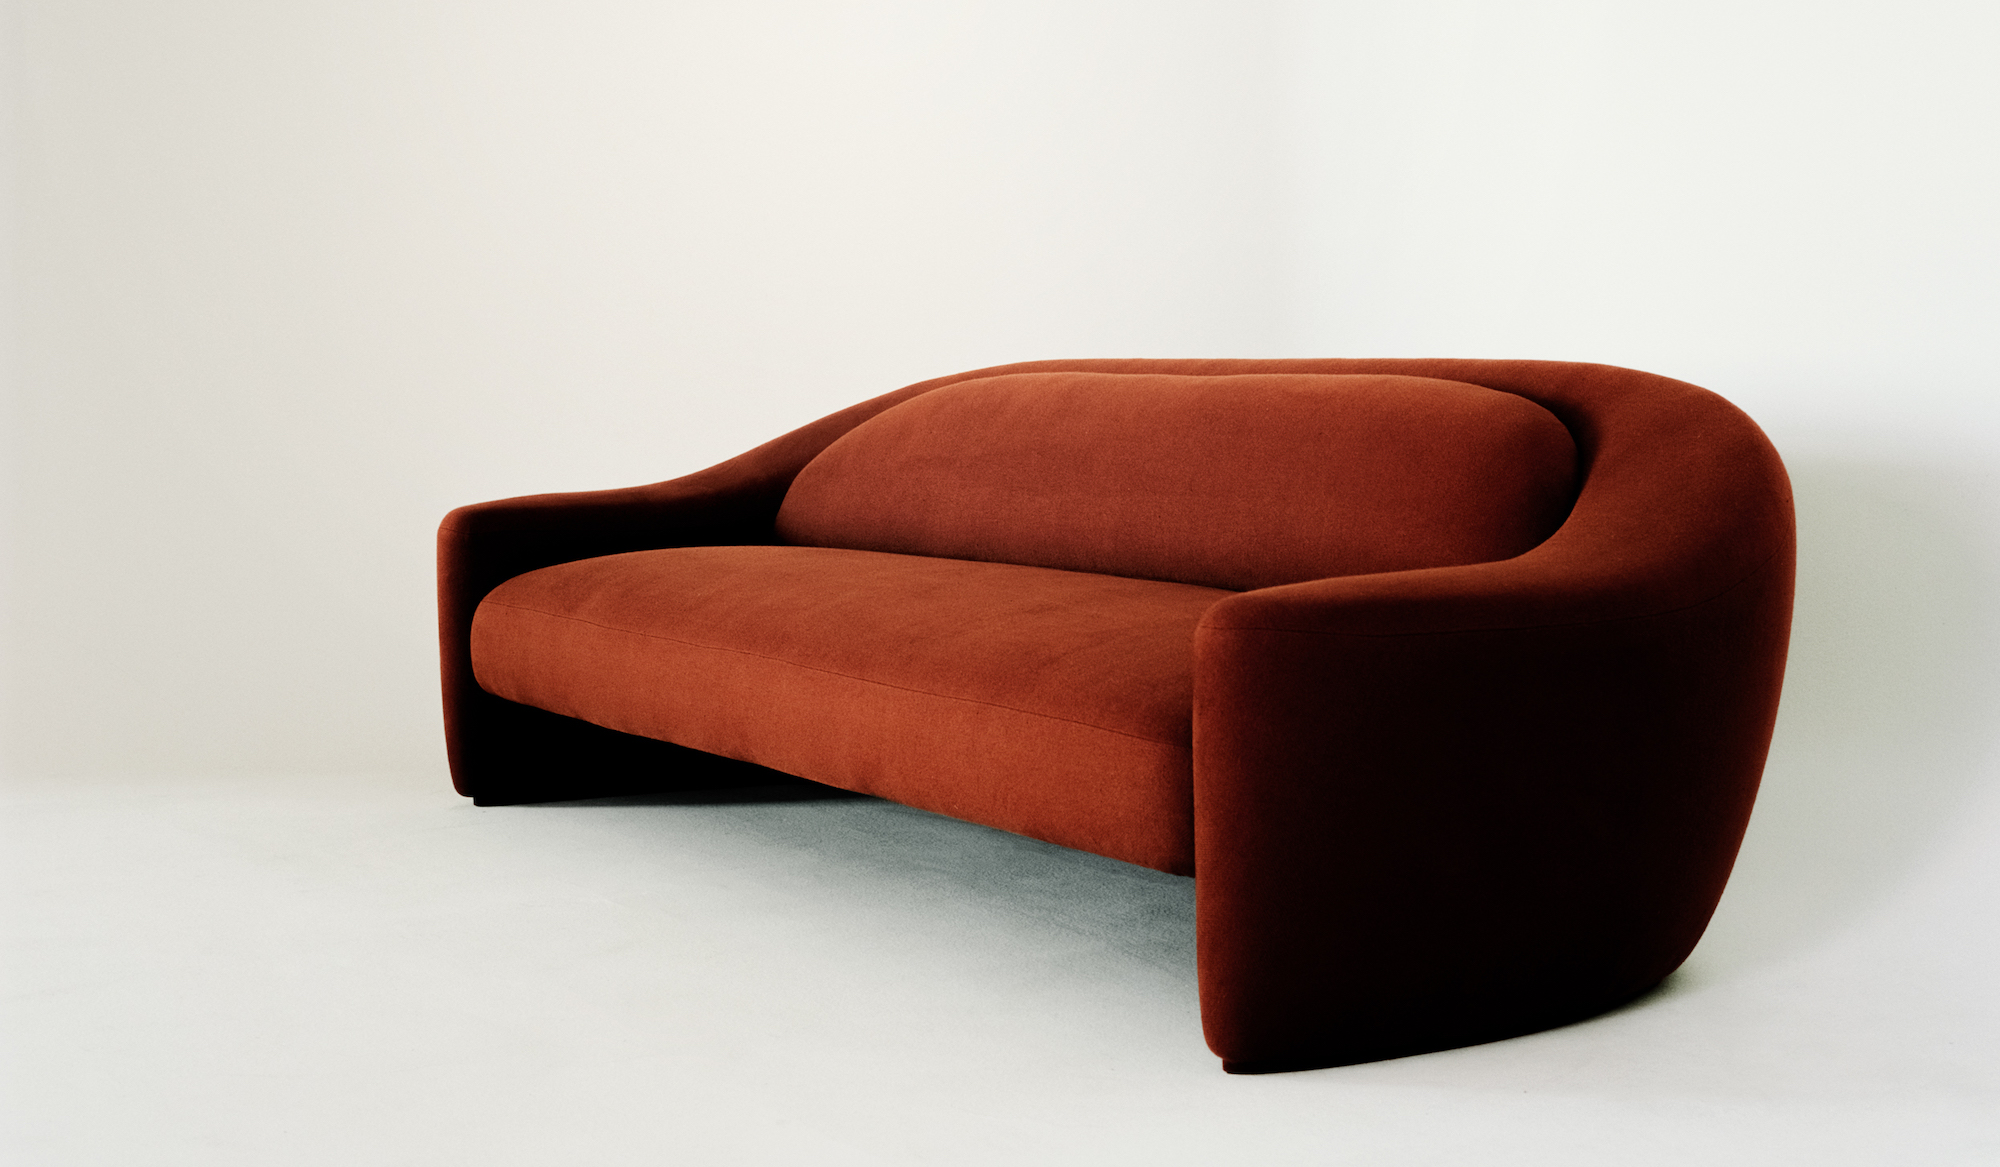 Sofa by Loro Piana at Milan Design Week